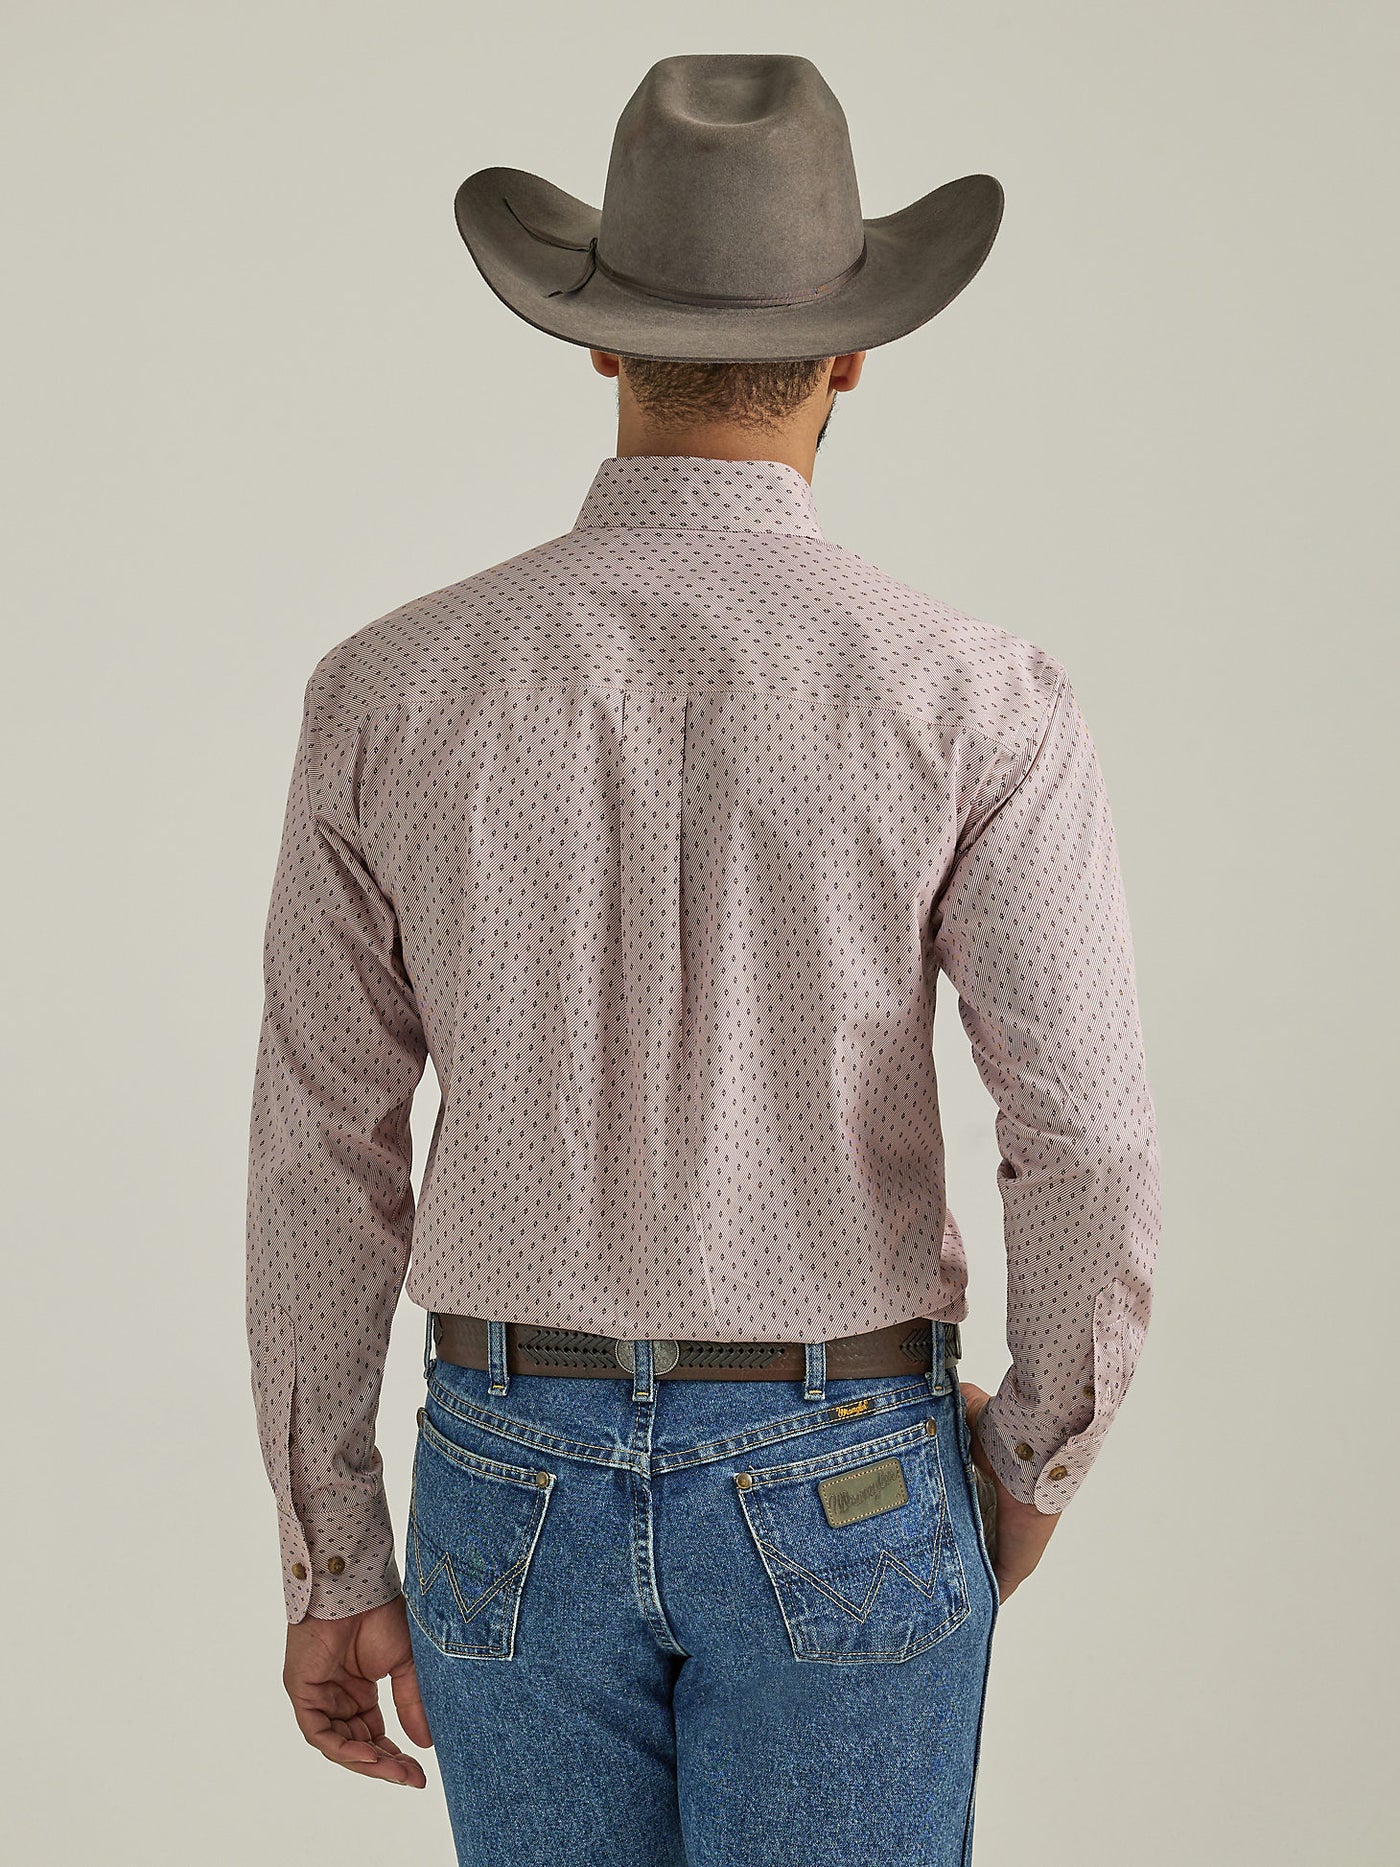 Wrangler Men's George Strait Long Sleeve Button Down One Pocket Shirt in Brick Red Diamond